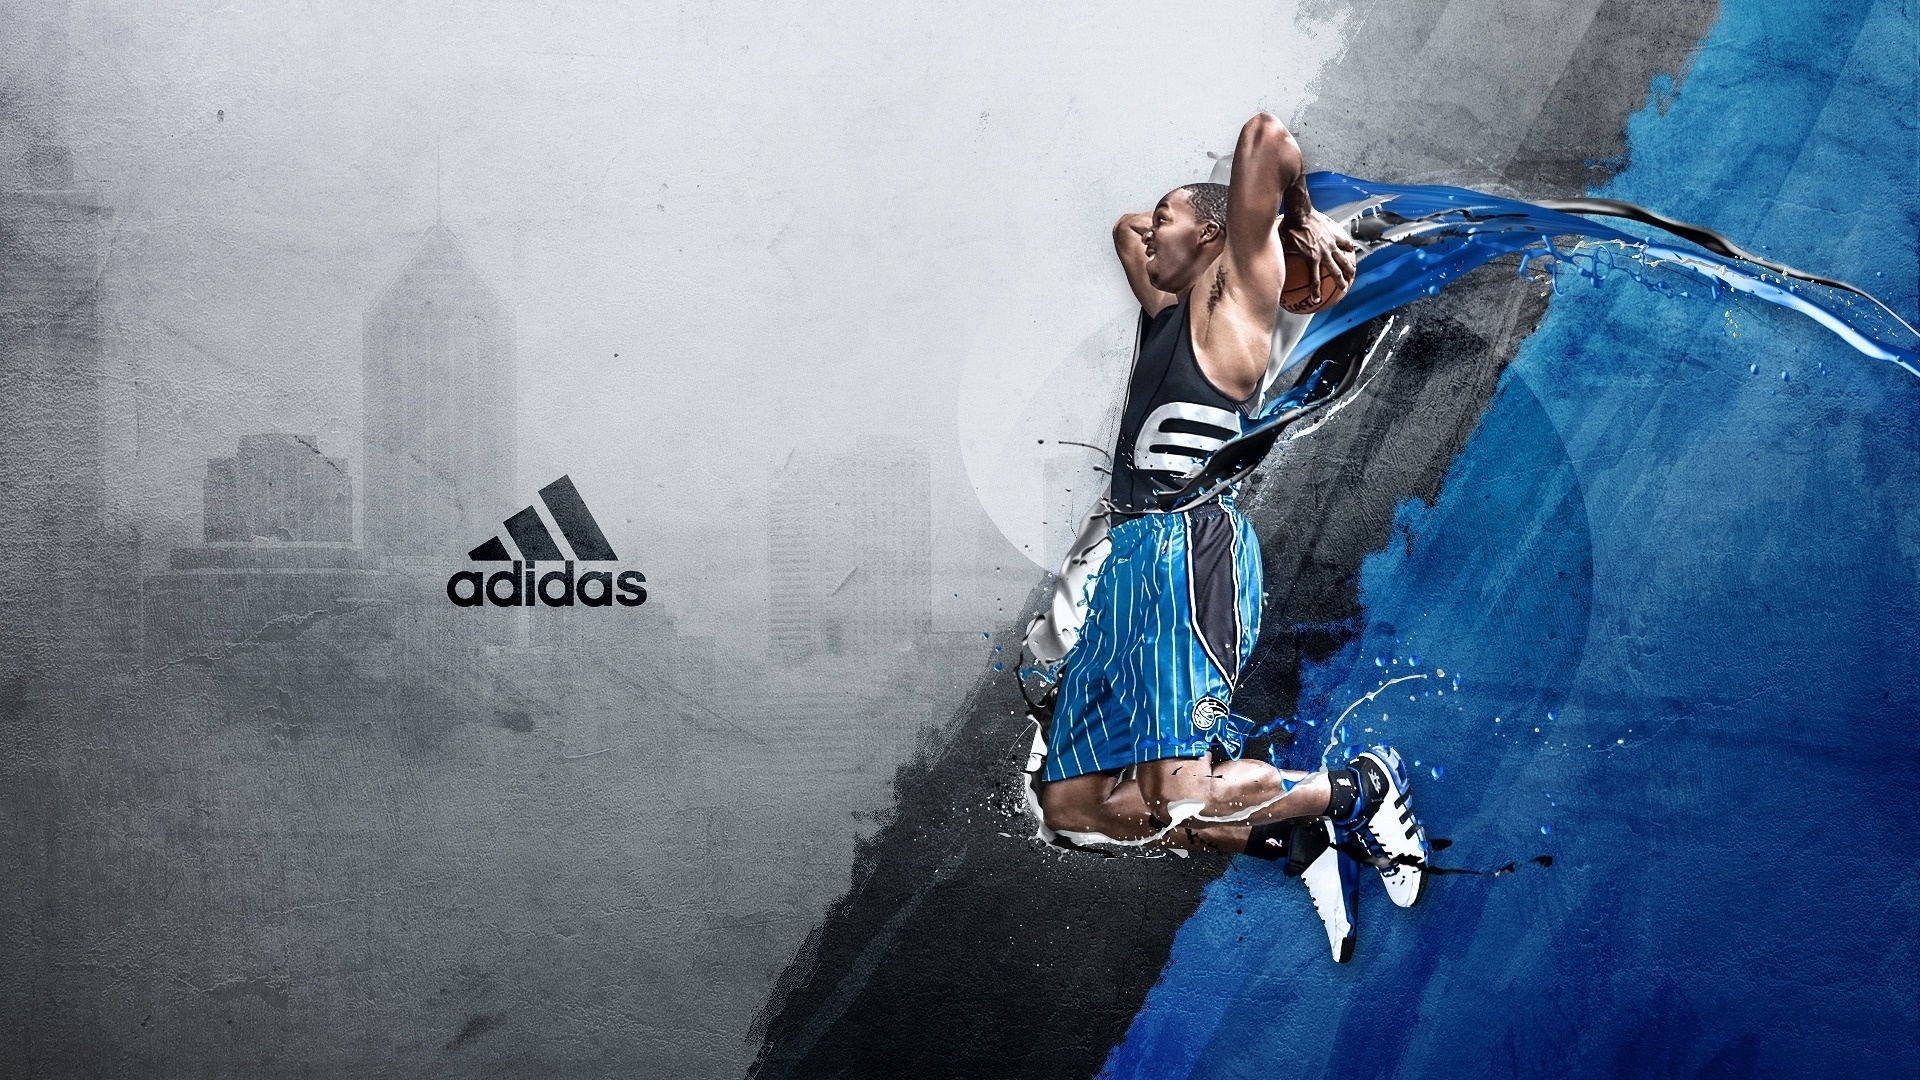 Adidas NBA баскетбол обои скачать